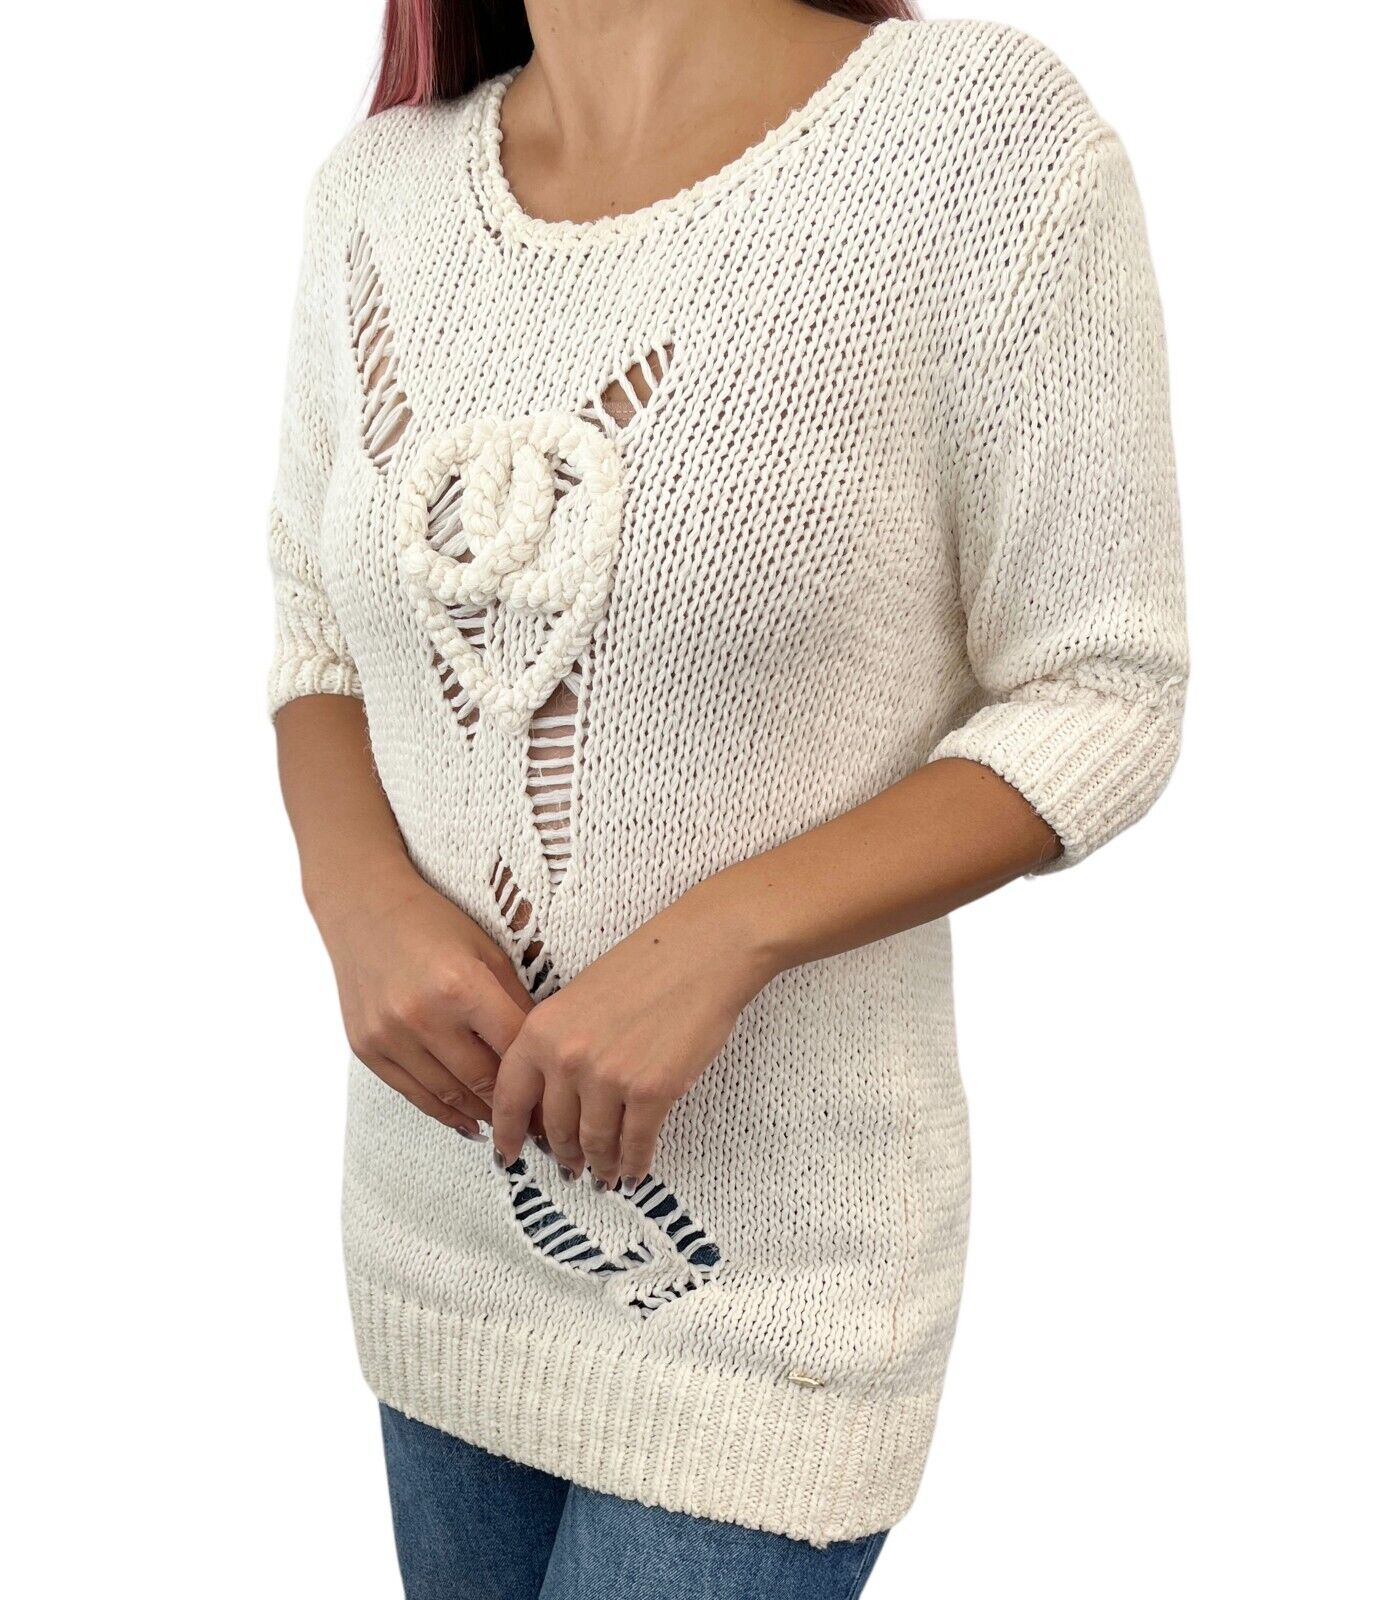 CHANEL Vintage 09C Heart CC Logo Knit Tunic #38 Sweater Top Cream Silk Rank AB